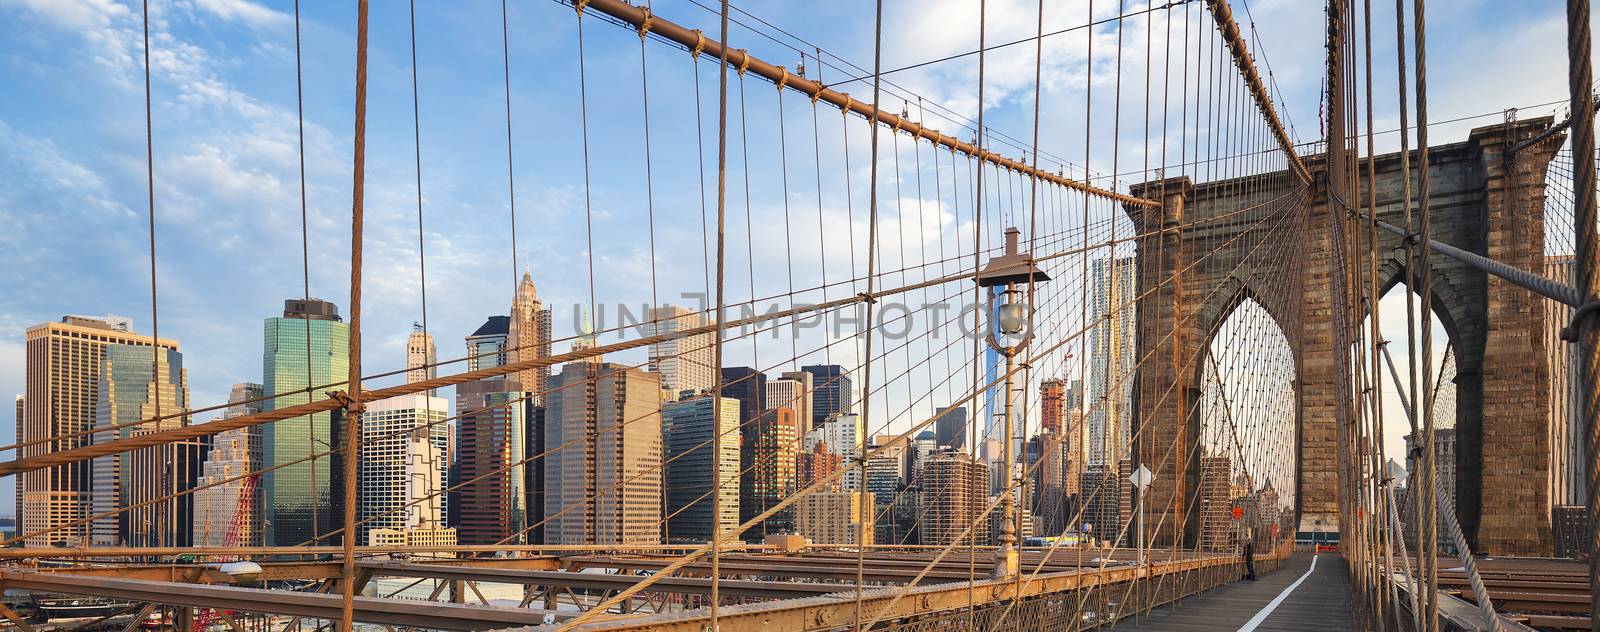 Panoramic view of Brooklyn Bridge by vwalakte